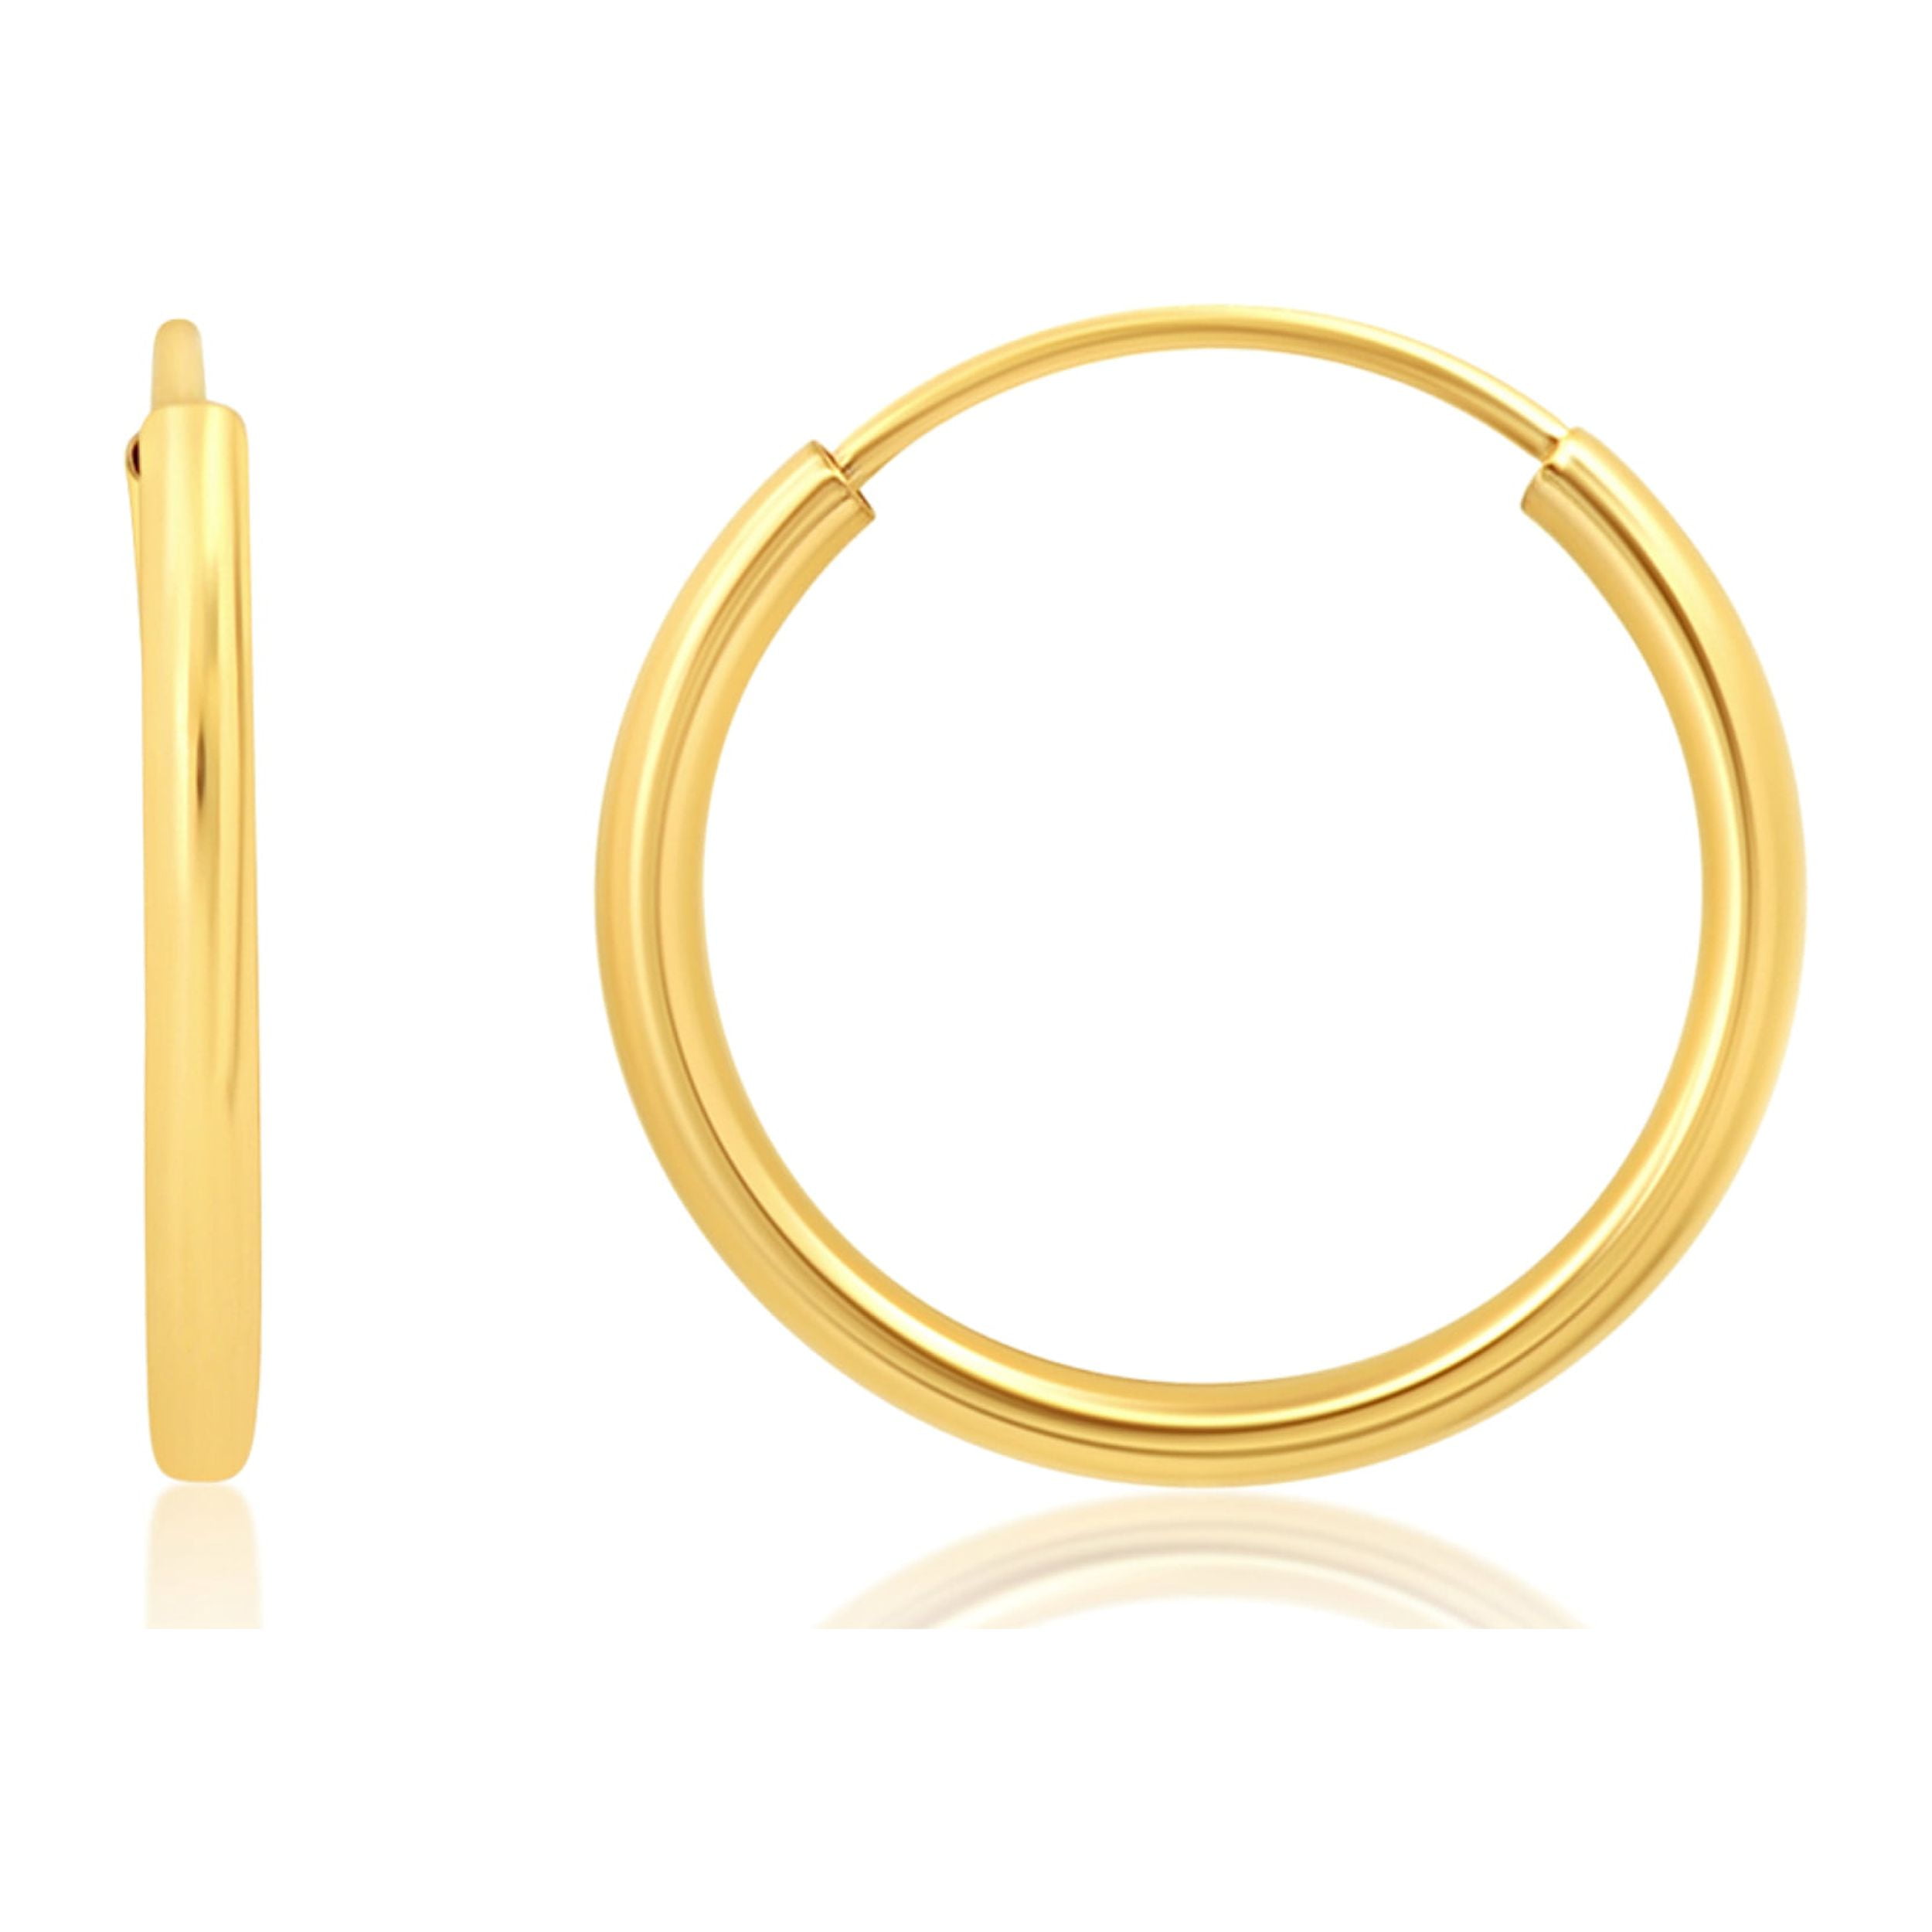 14K Gold Small Hoop Earrings, Solid Gold Hoops 14K Gold / 21mm